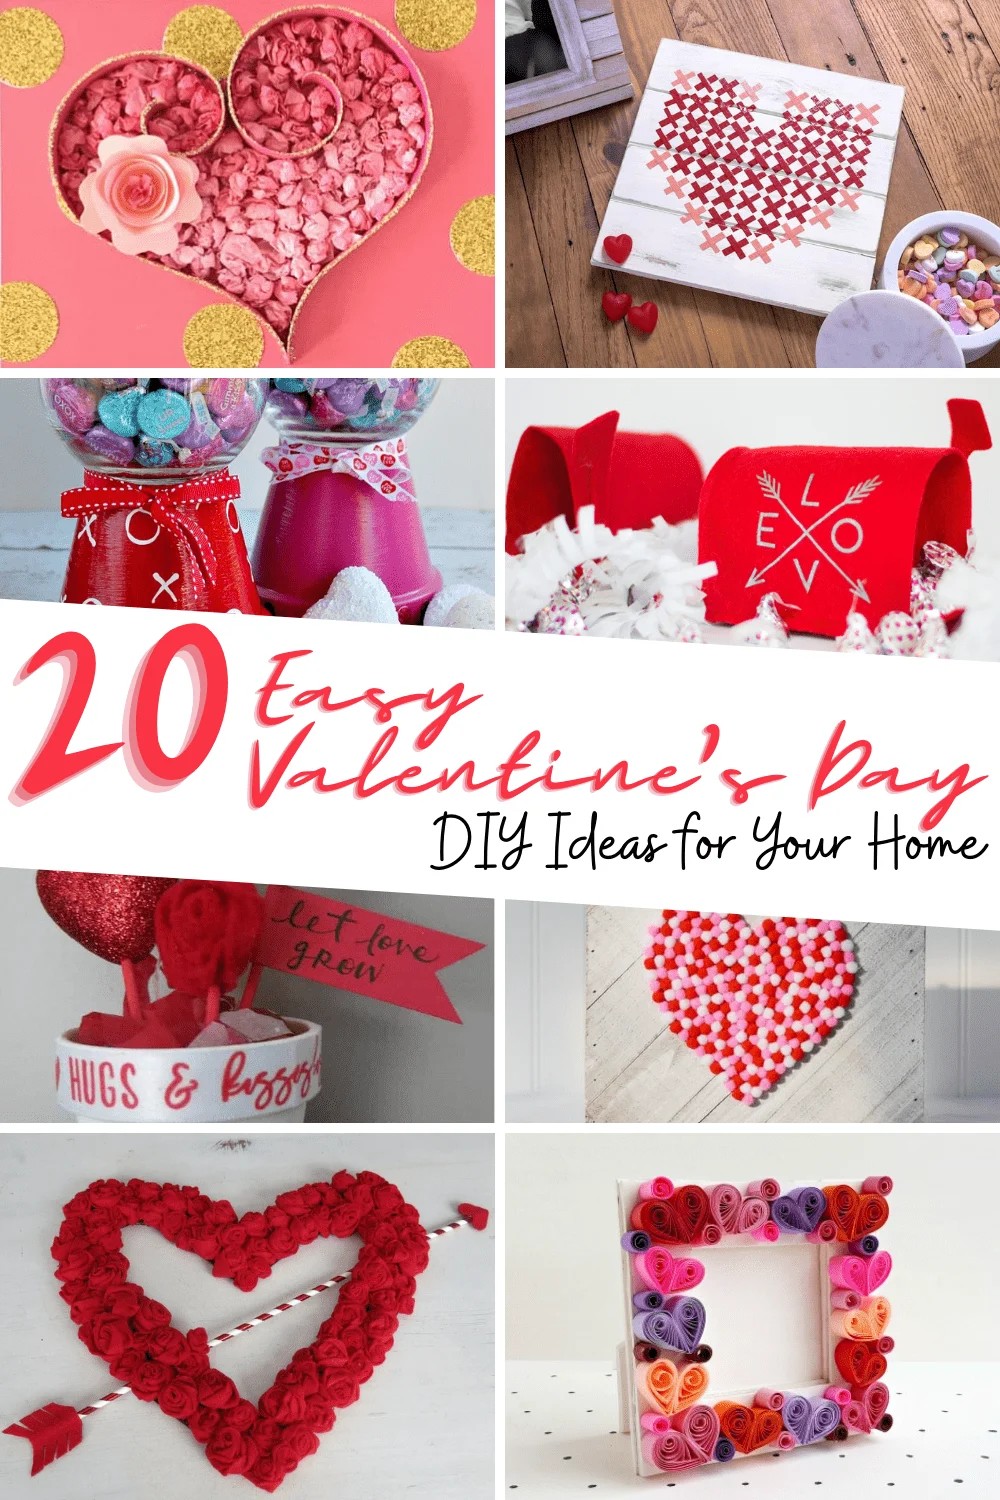 DIY Valentine Decoration Craft: Paper Heart Hanging for DIY Room Decor on  Valentine's Day 